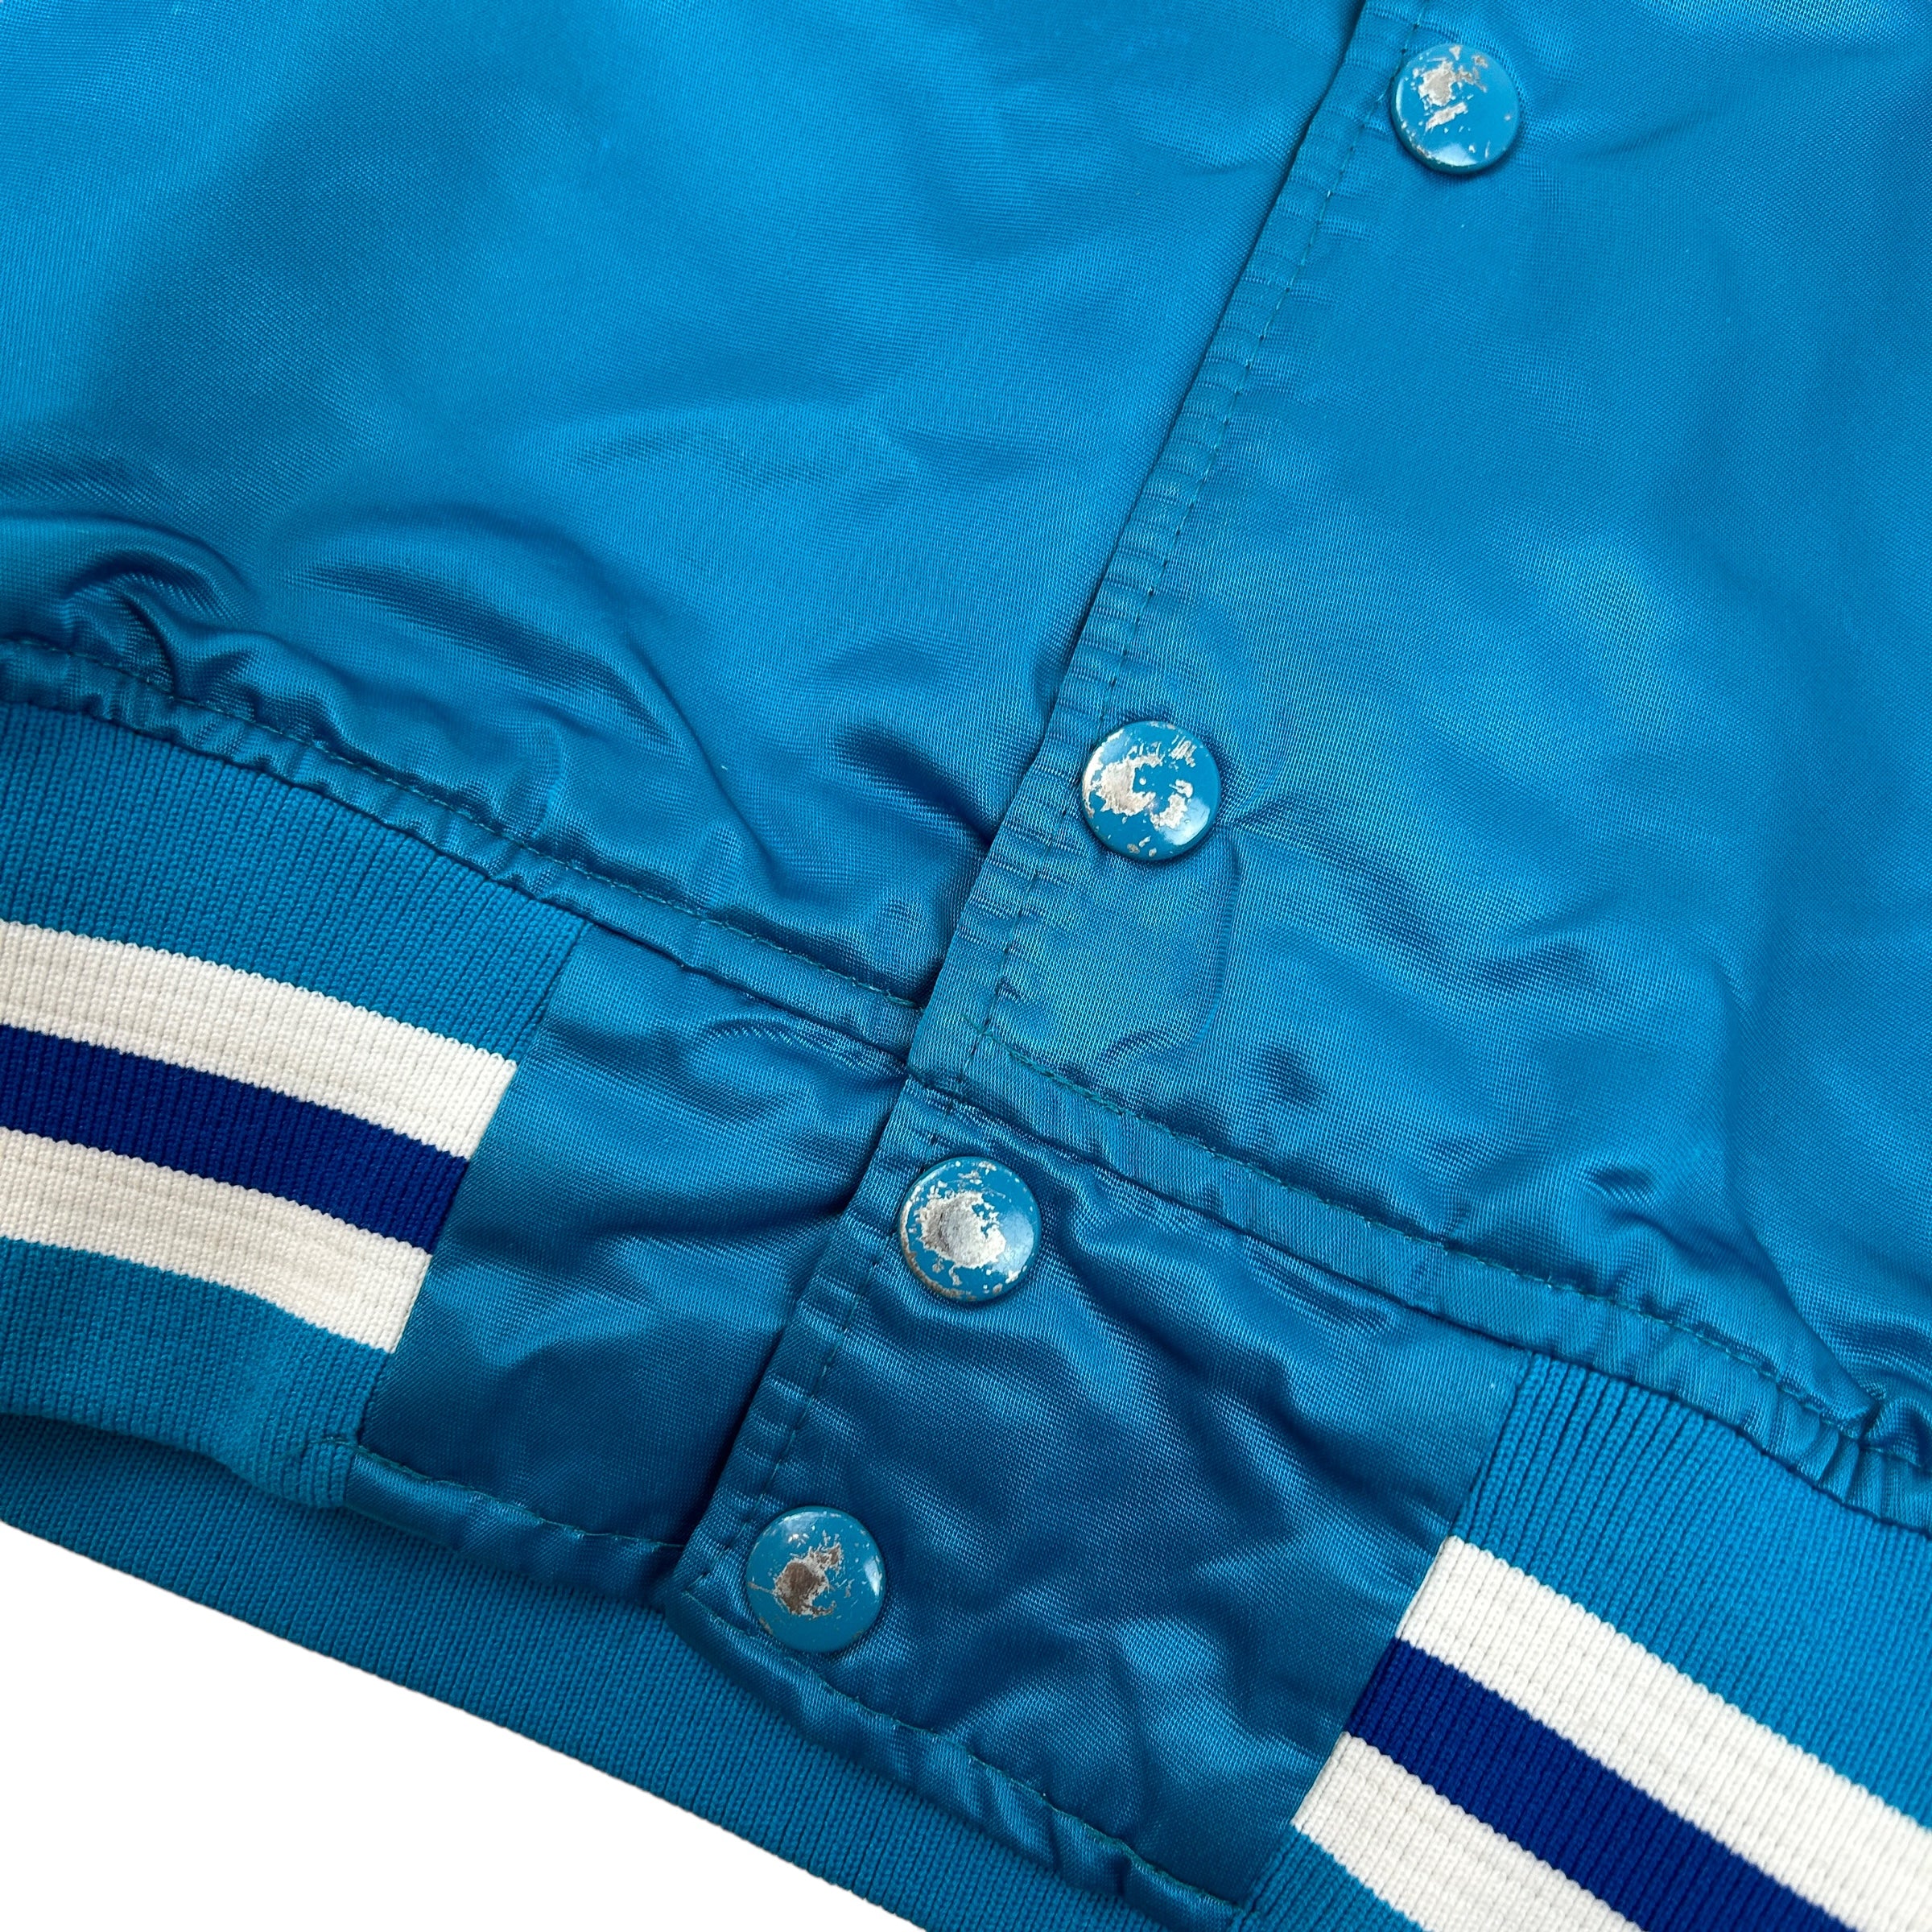 Vintage Charlotte Hornets Starter Varsity Jacket